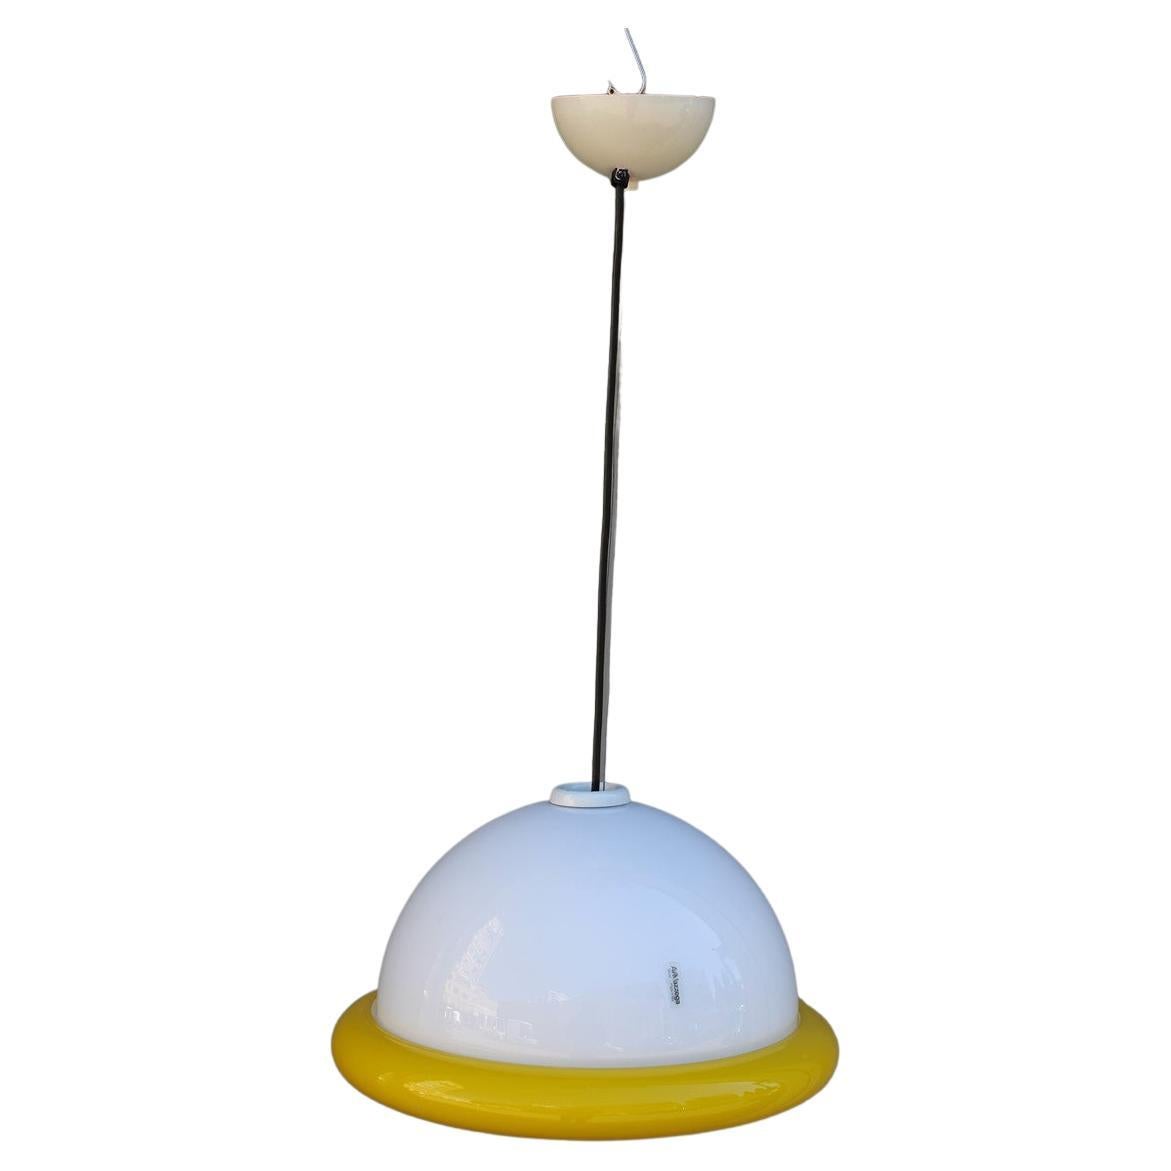 AV Mazzega table ronde italienne blanc et jaune design italien des années 1970 style Sottsass en vente